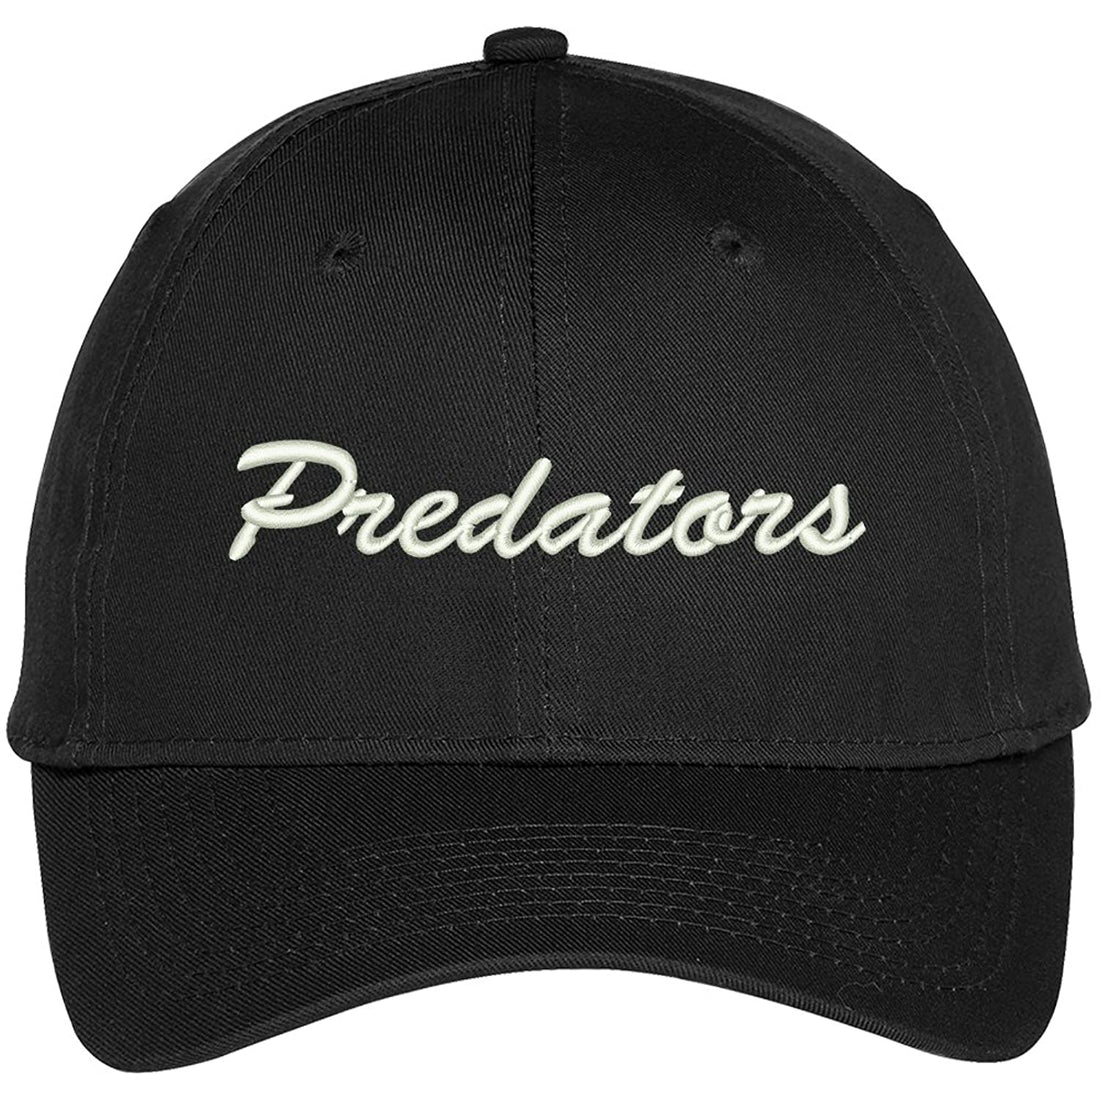 Trendy Apparel Shop Predators Embroidered Precurved Adjustable Cap